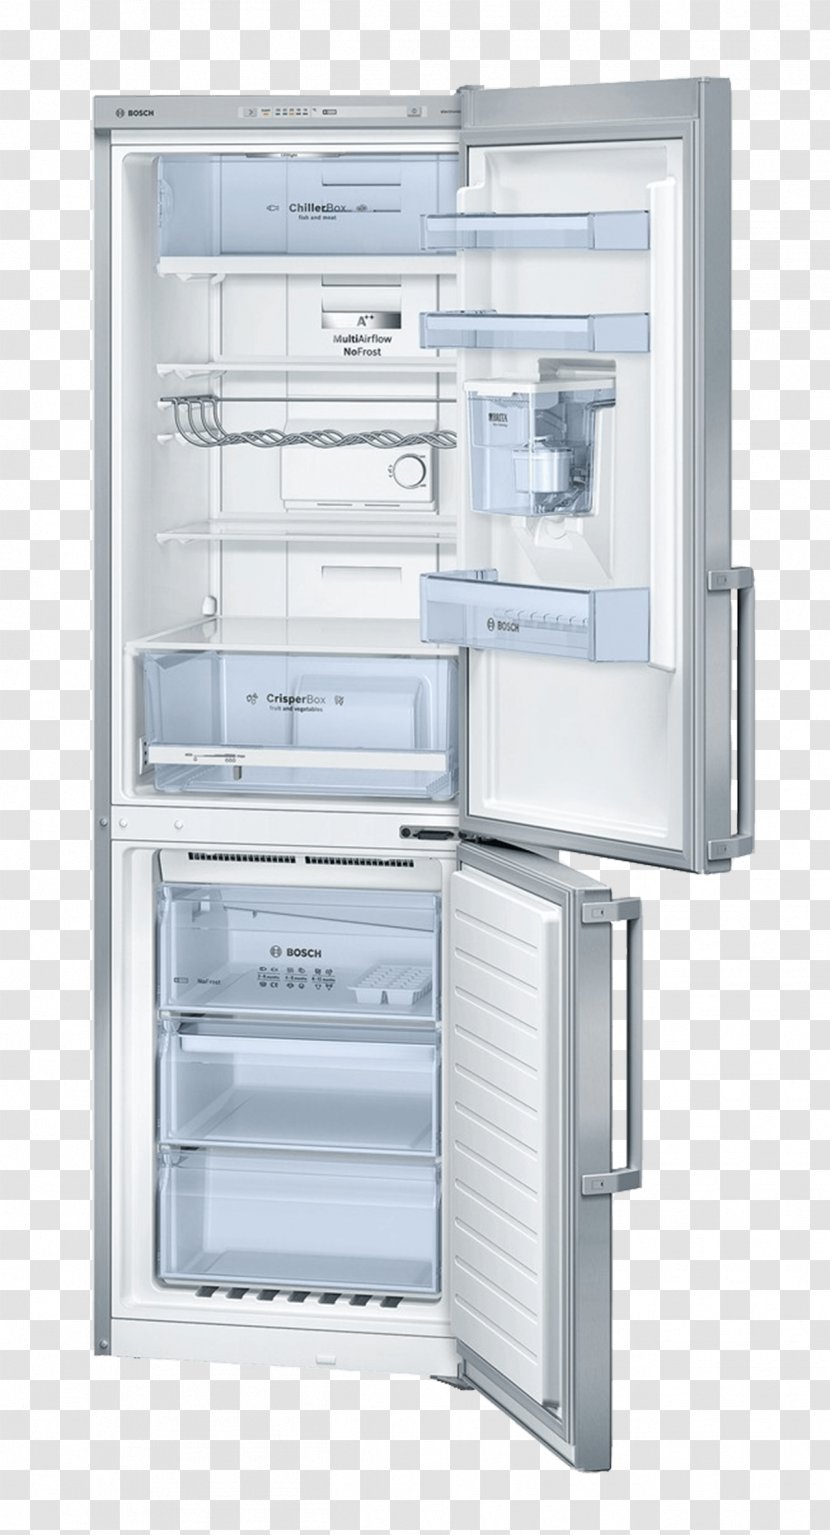 Refrigerator Home Appliance Freezers Auto-defrost Robert Bosch GmbH - Major - Fridge Transparent PNG